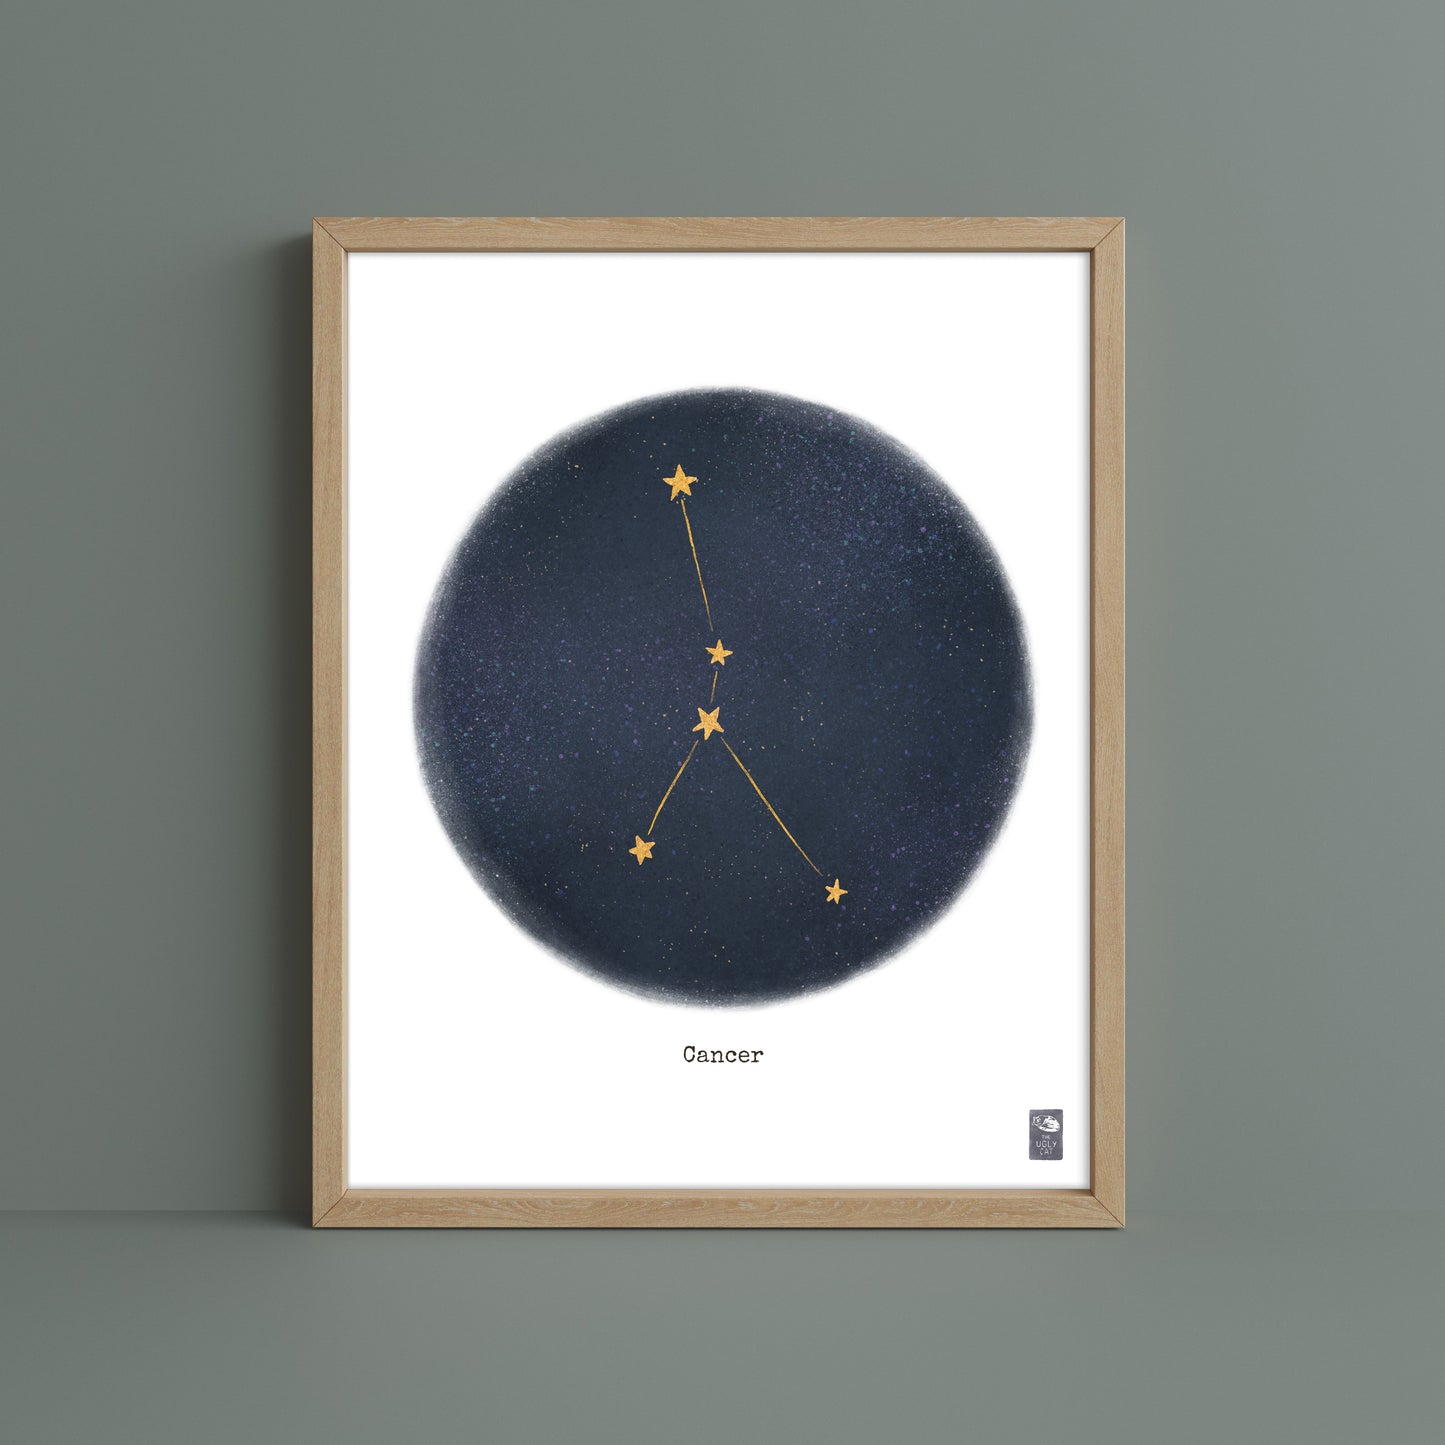 "Cancer ♋" by Catherine Hébert - Cancer Zodiac Constellation Art Print